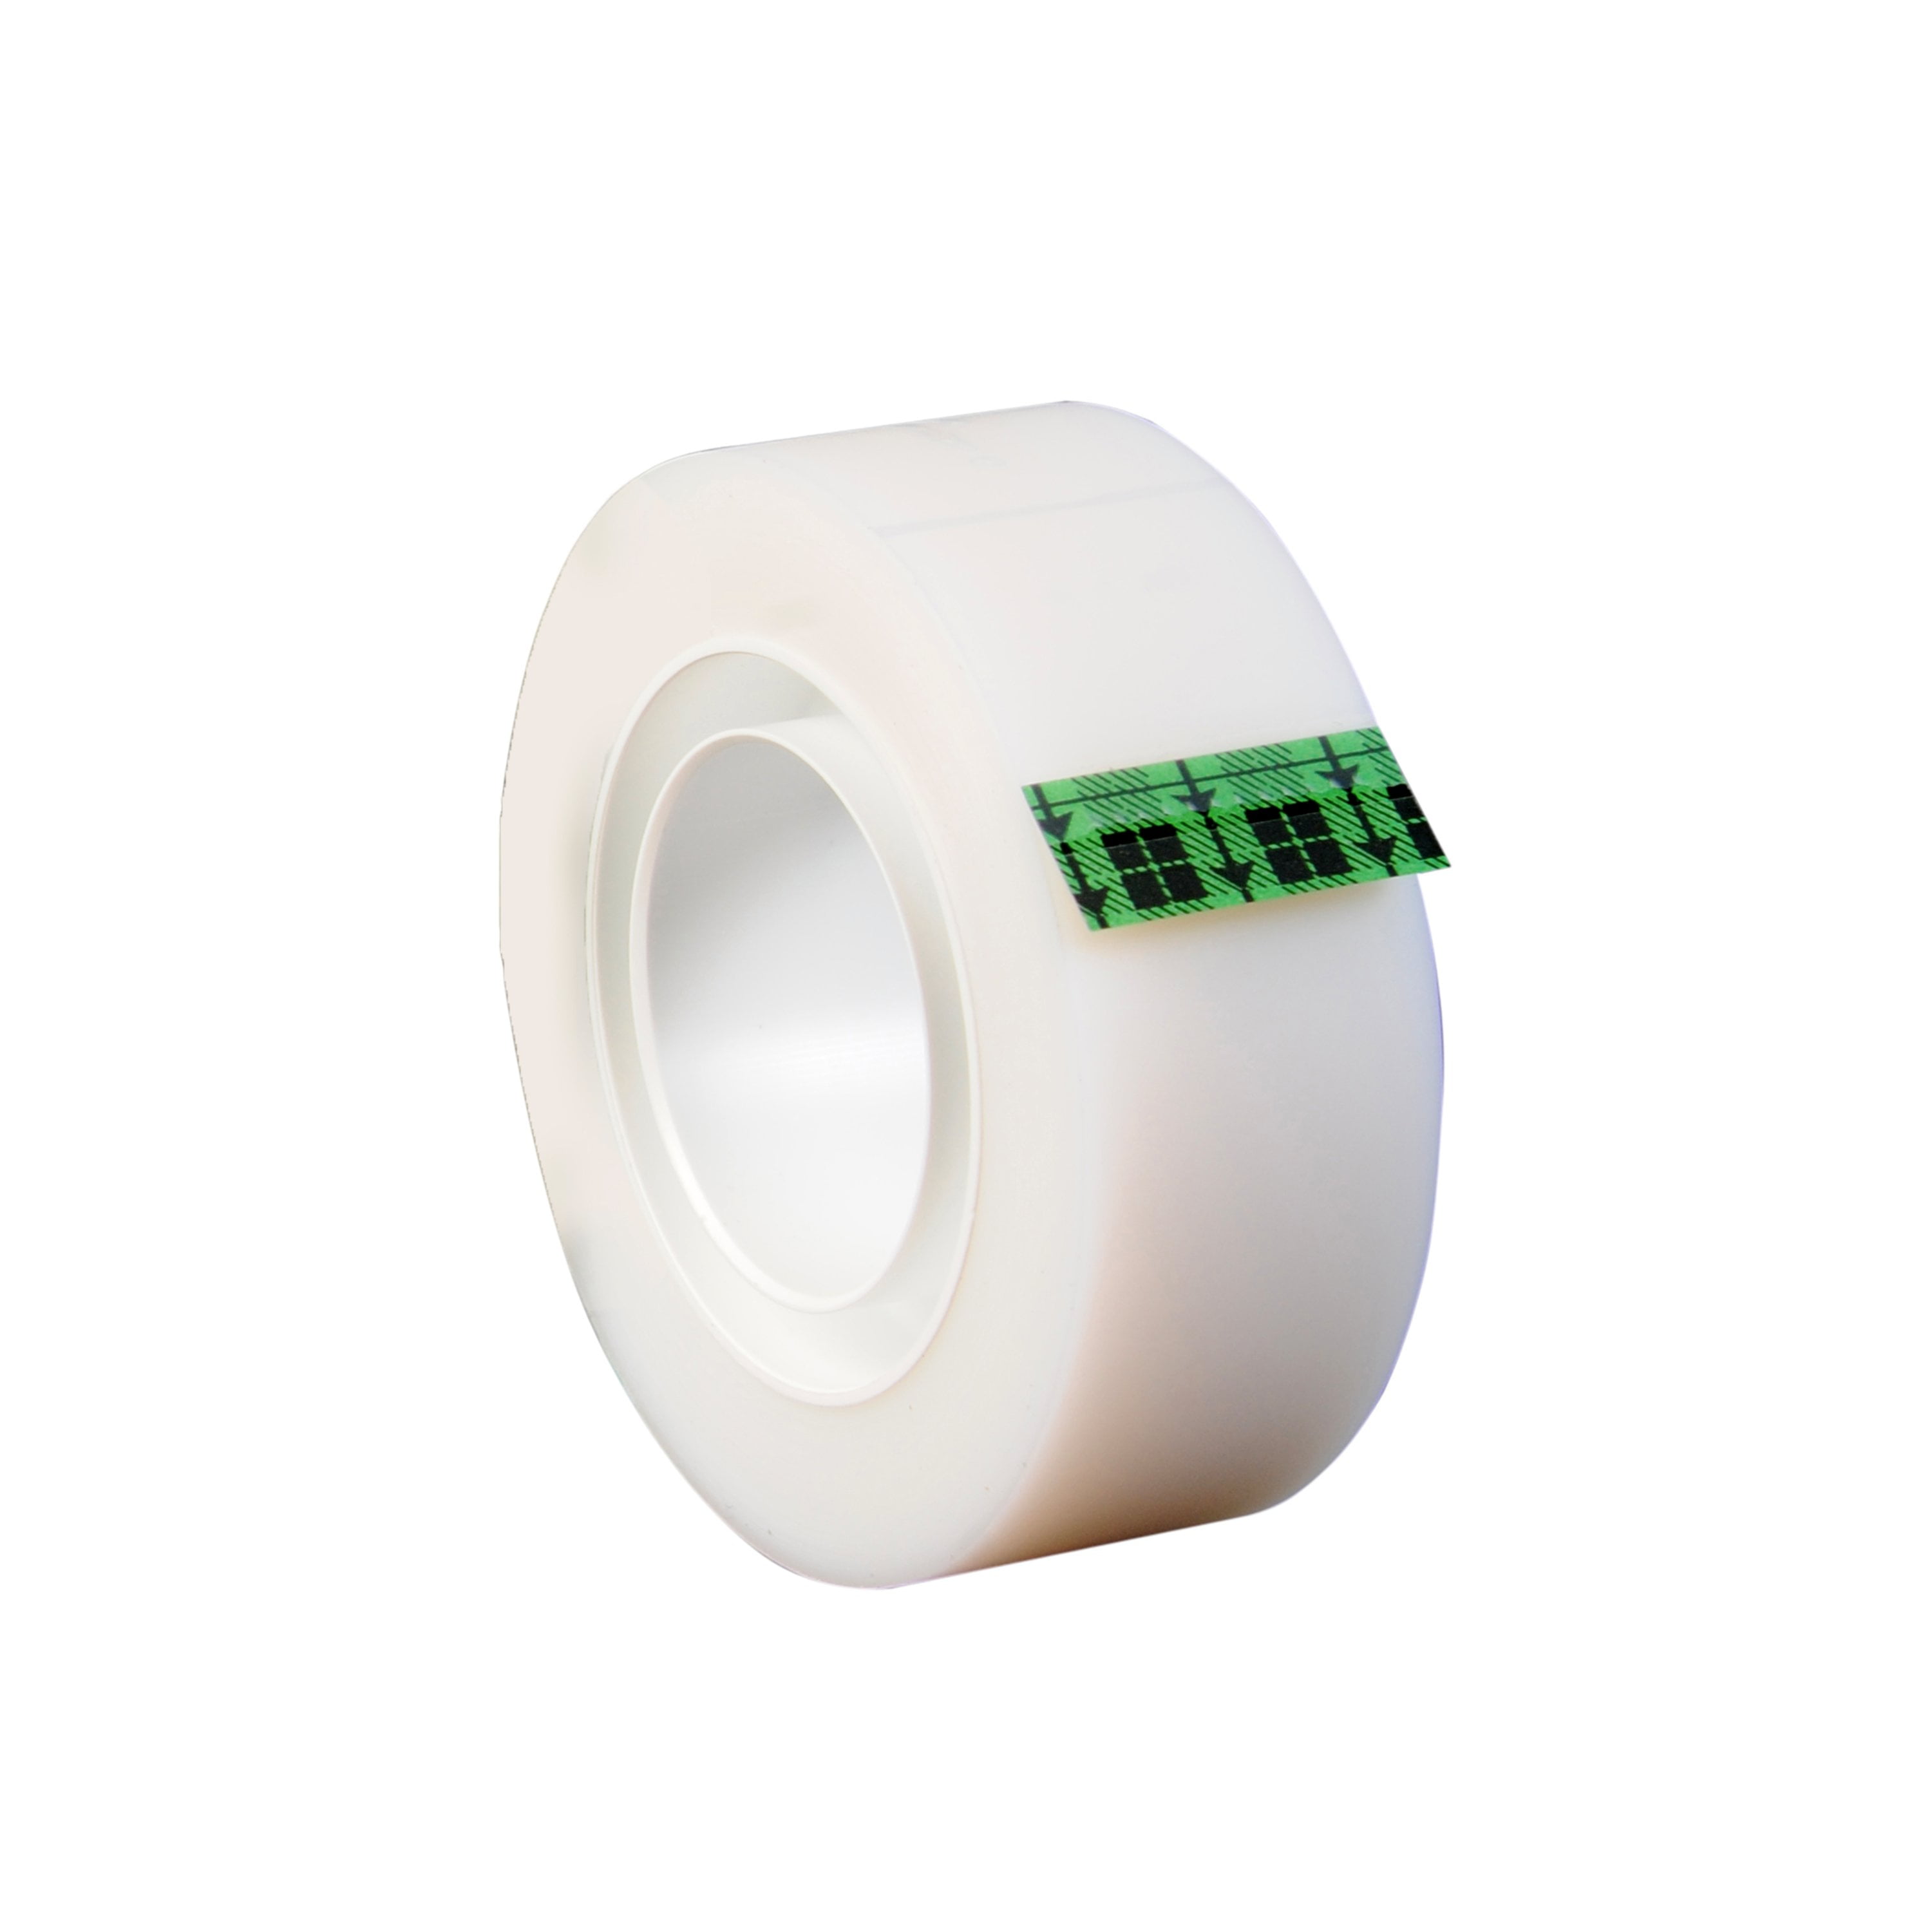 Scotch® Wall-Safe Tape Refill Rolls